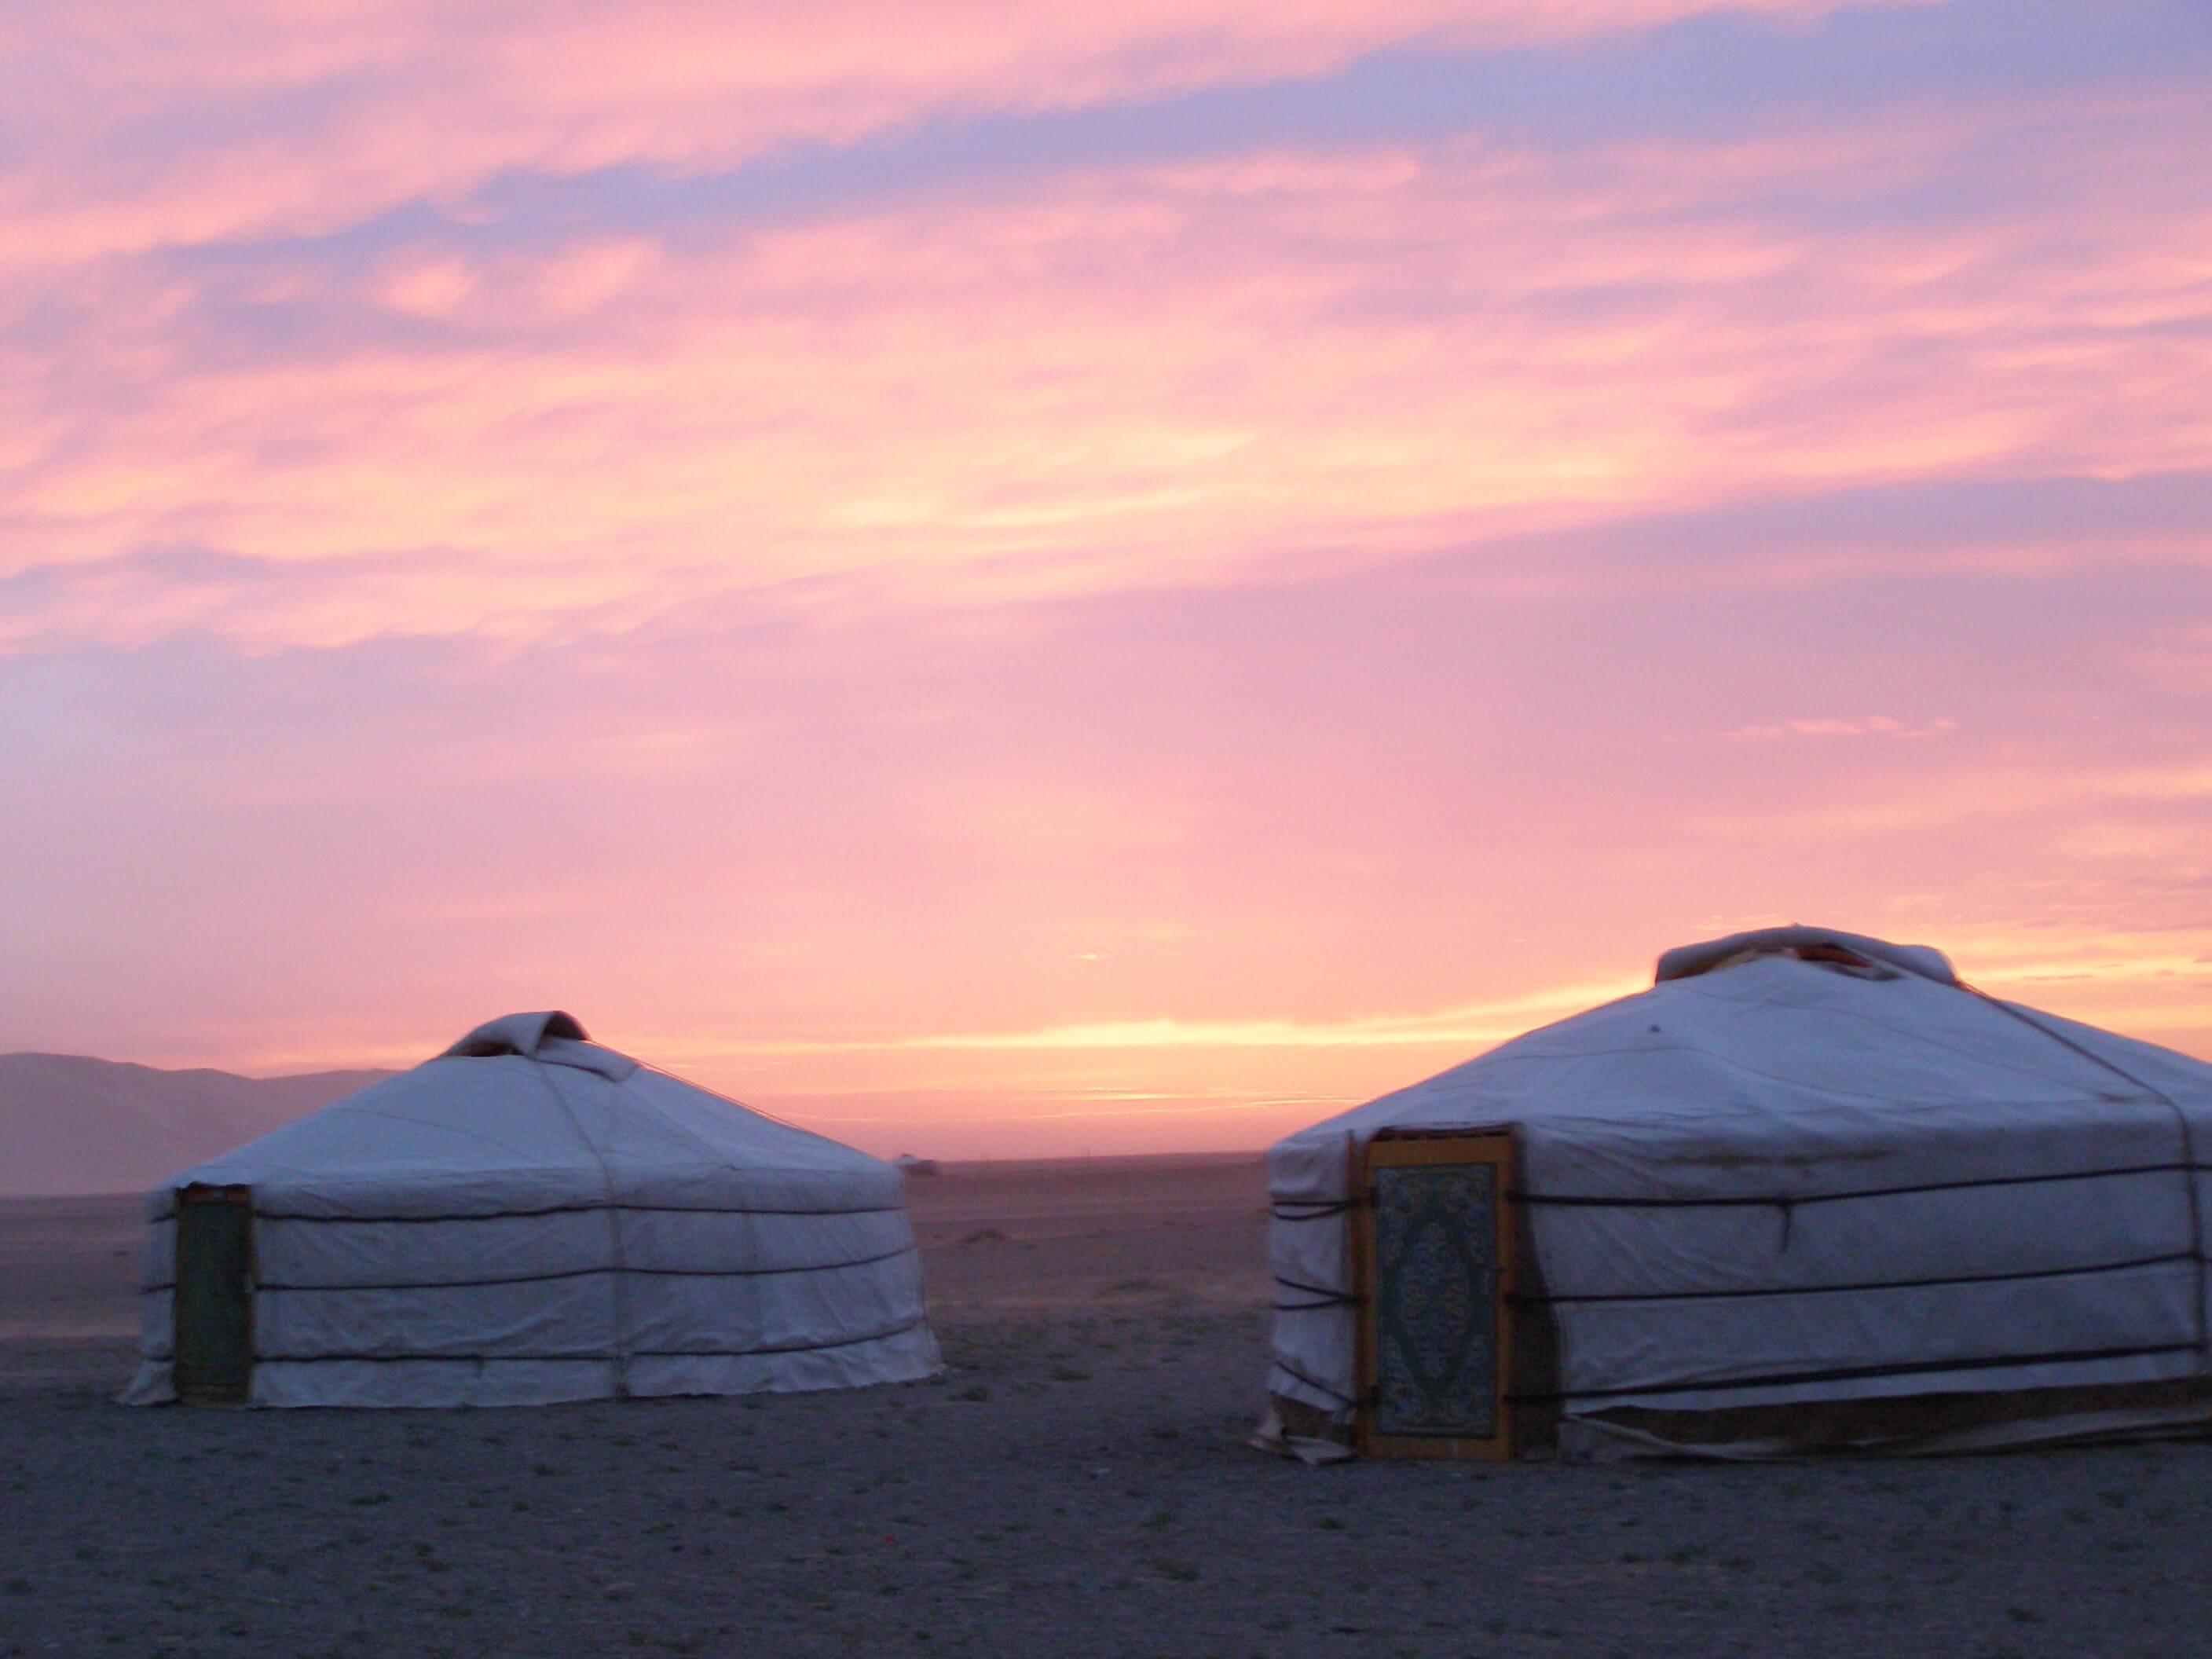 mongolie, gers bij zonsondergang.jpg